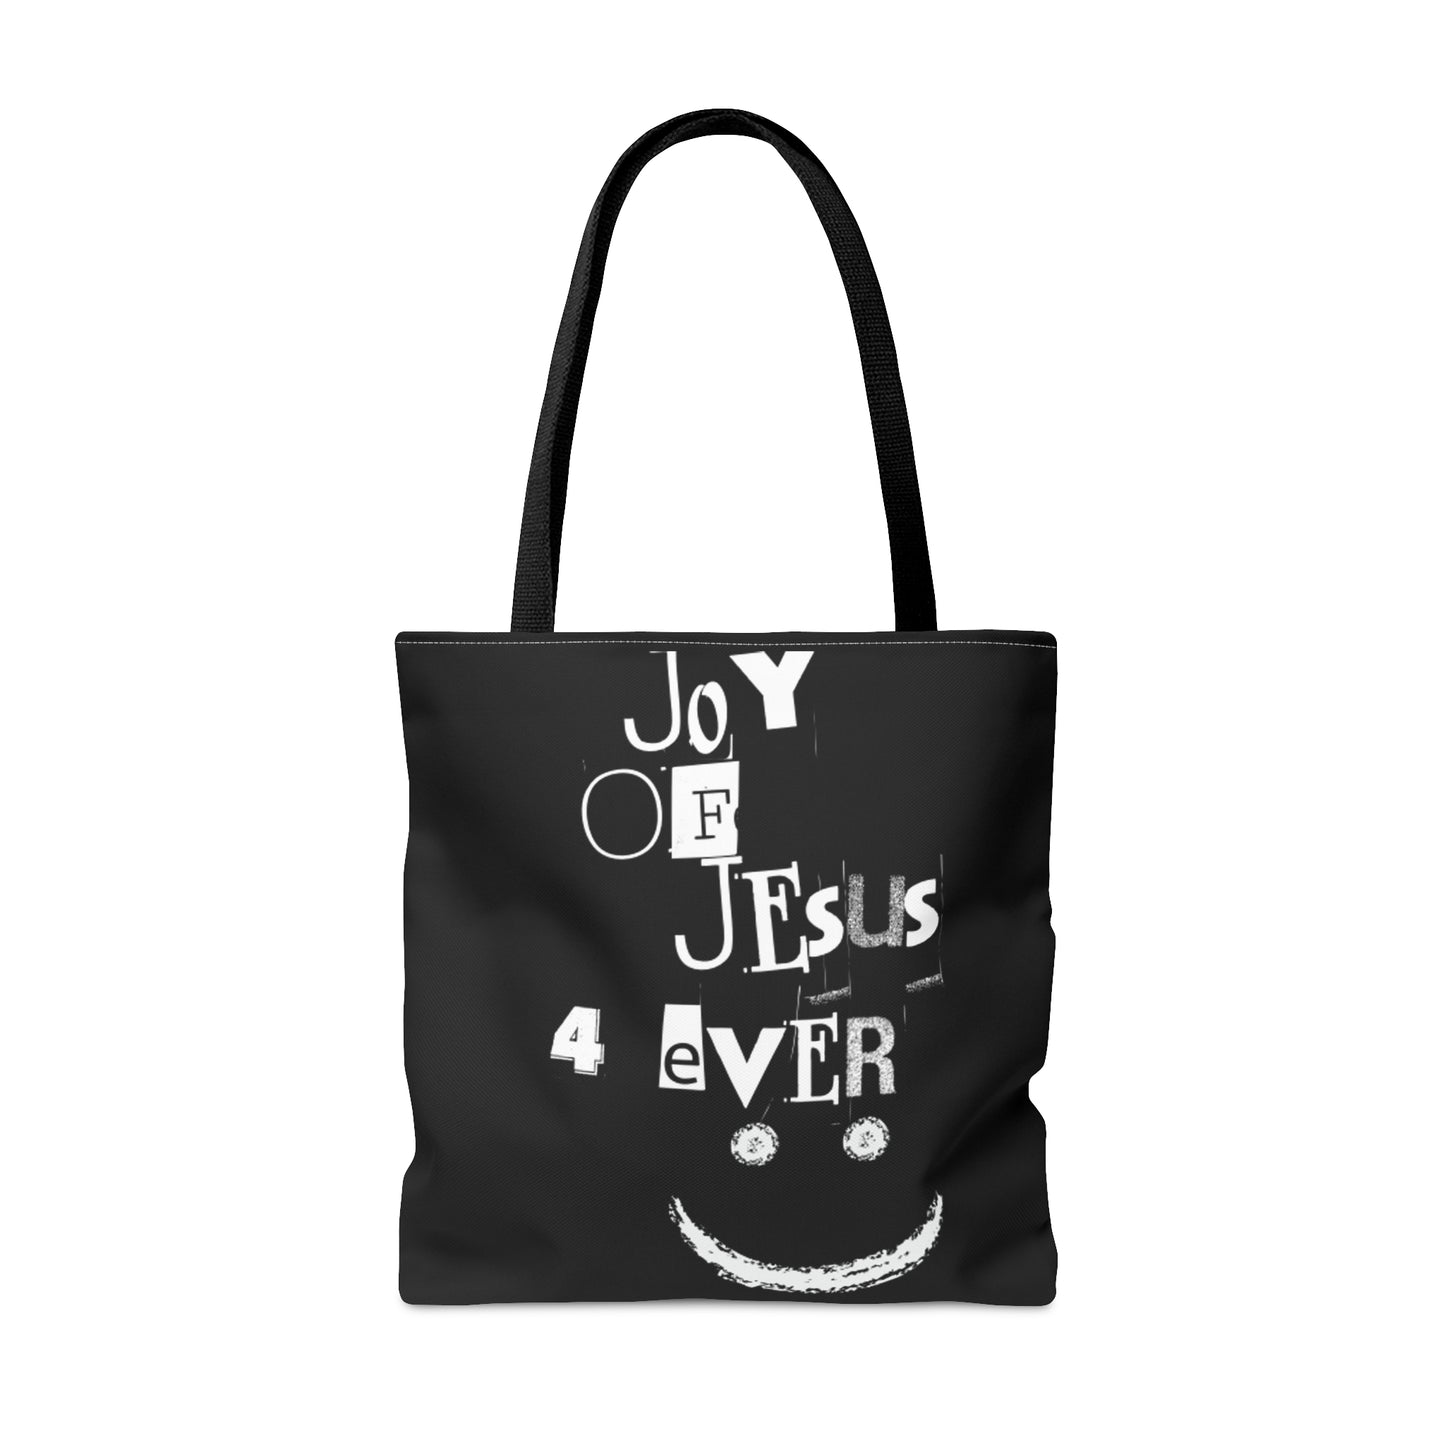 Joy of Jesus Tote Bag